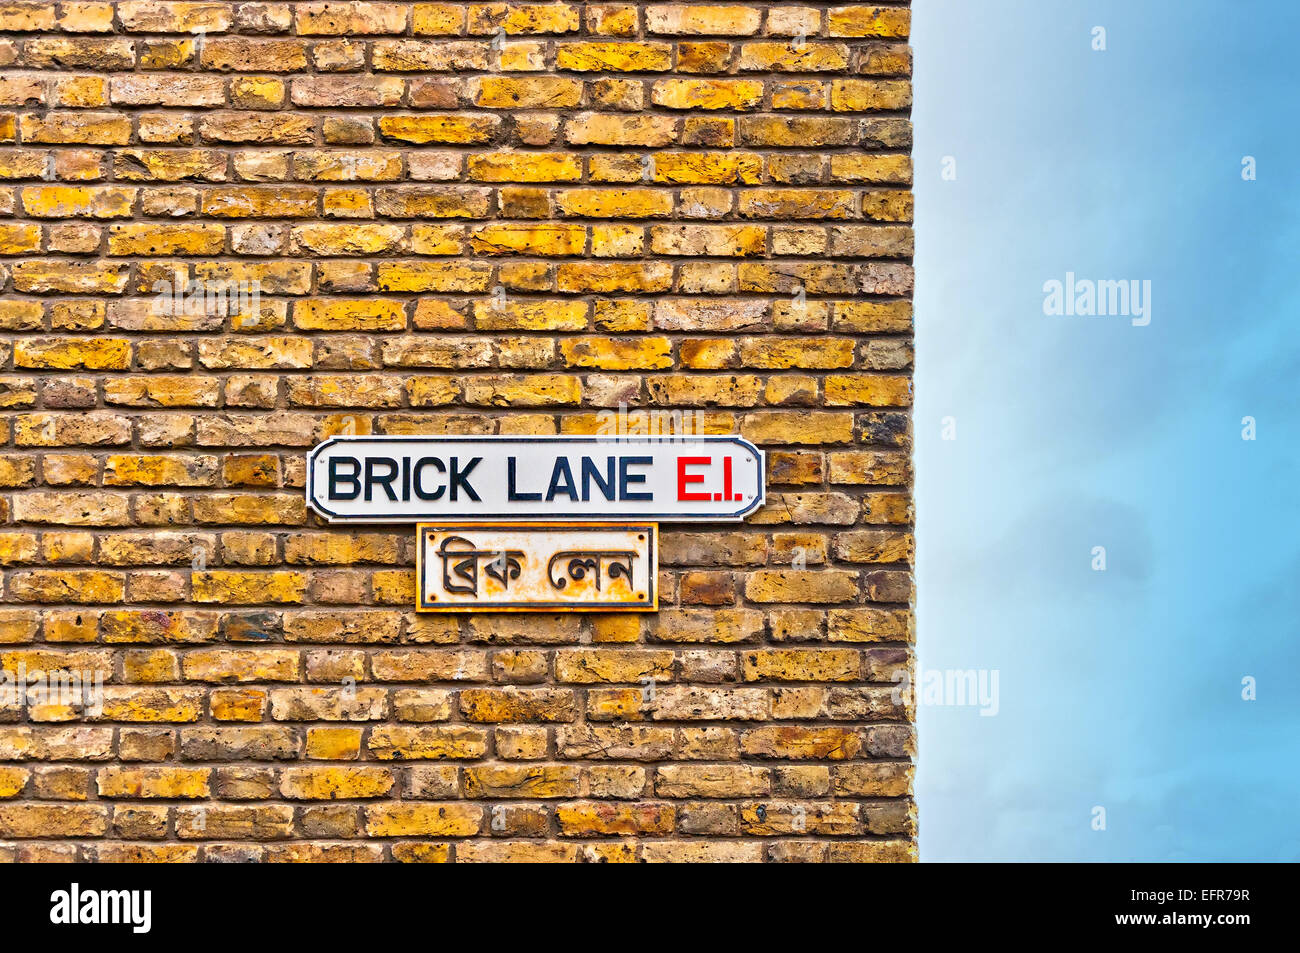 Brick Lane street sign in East End, London - UK Stock Photo